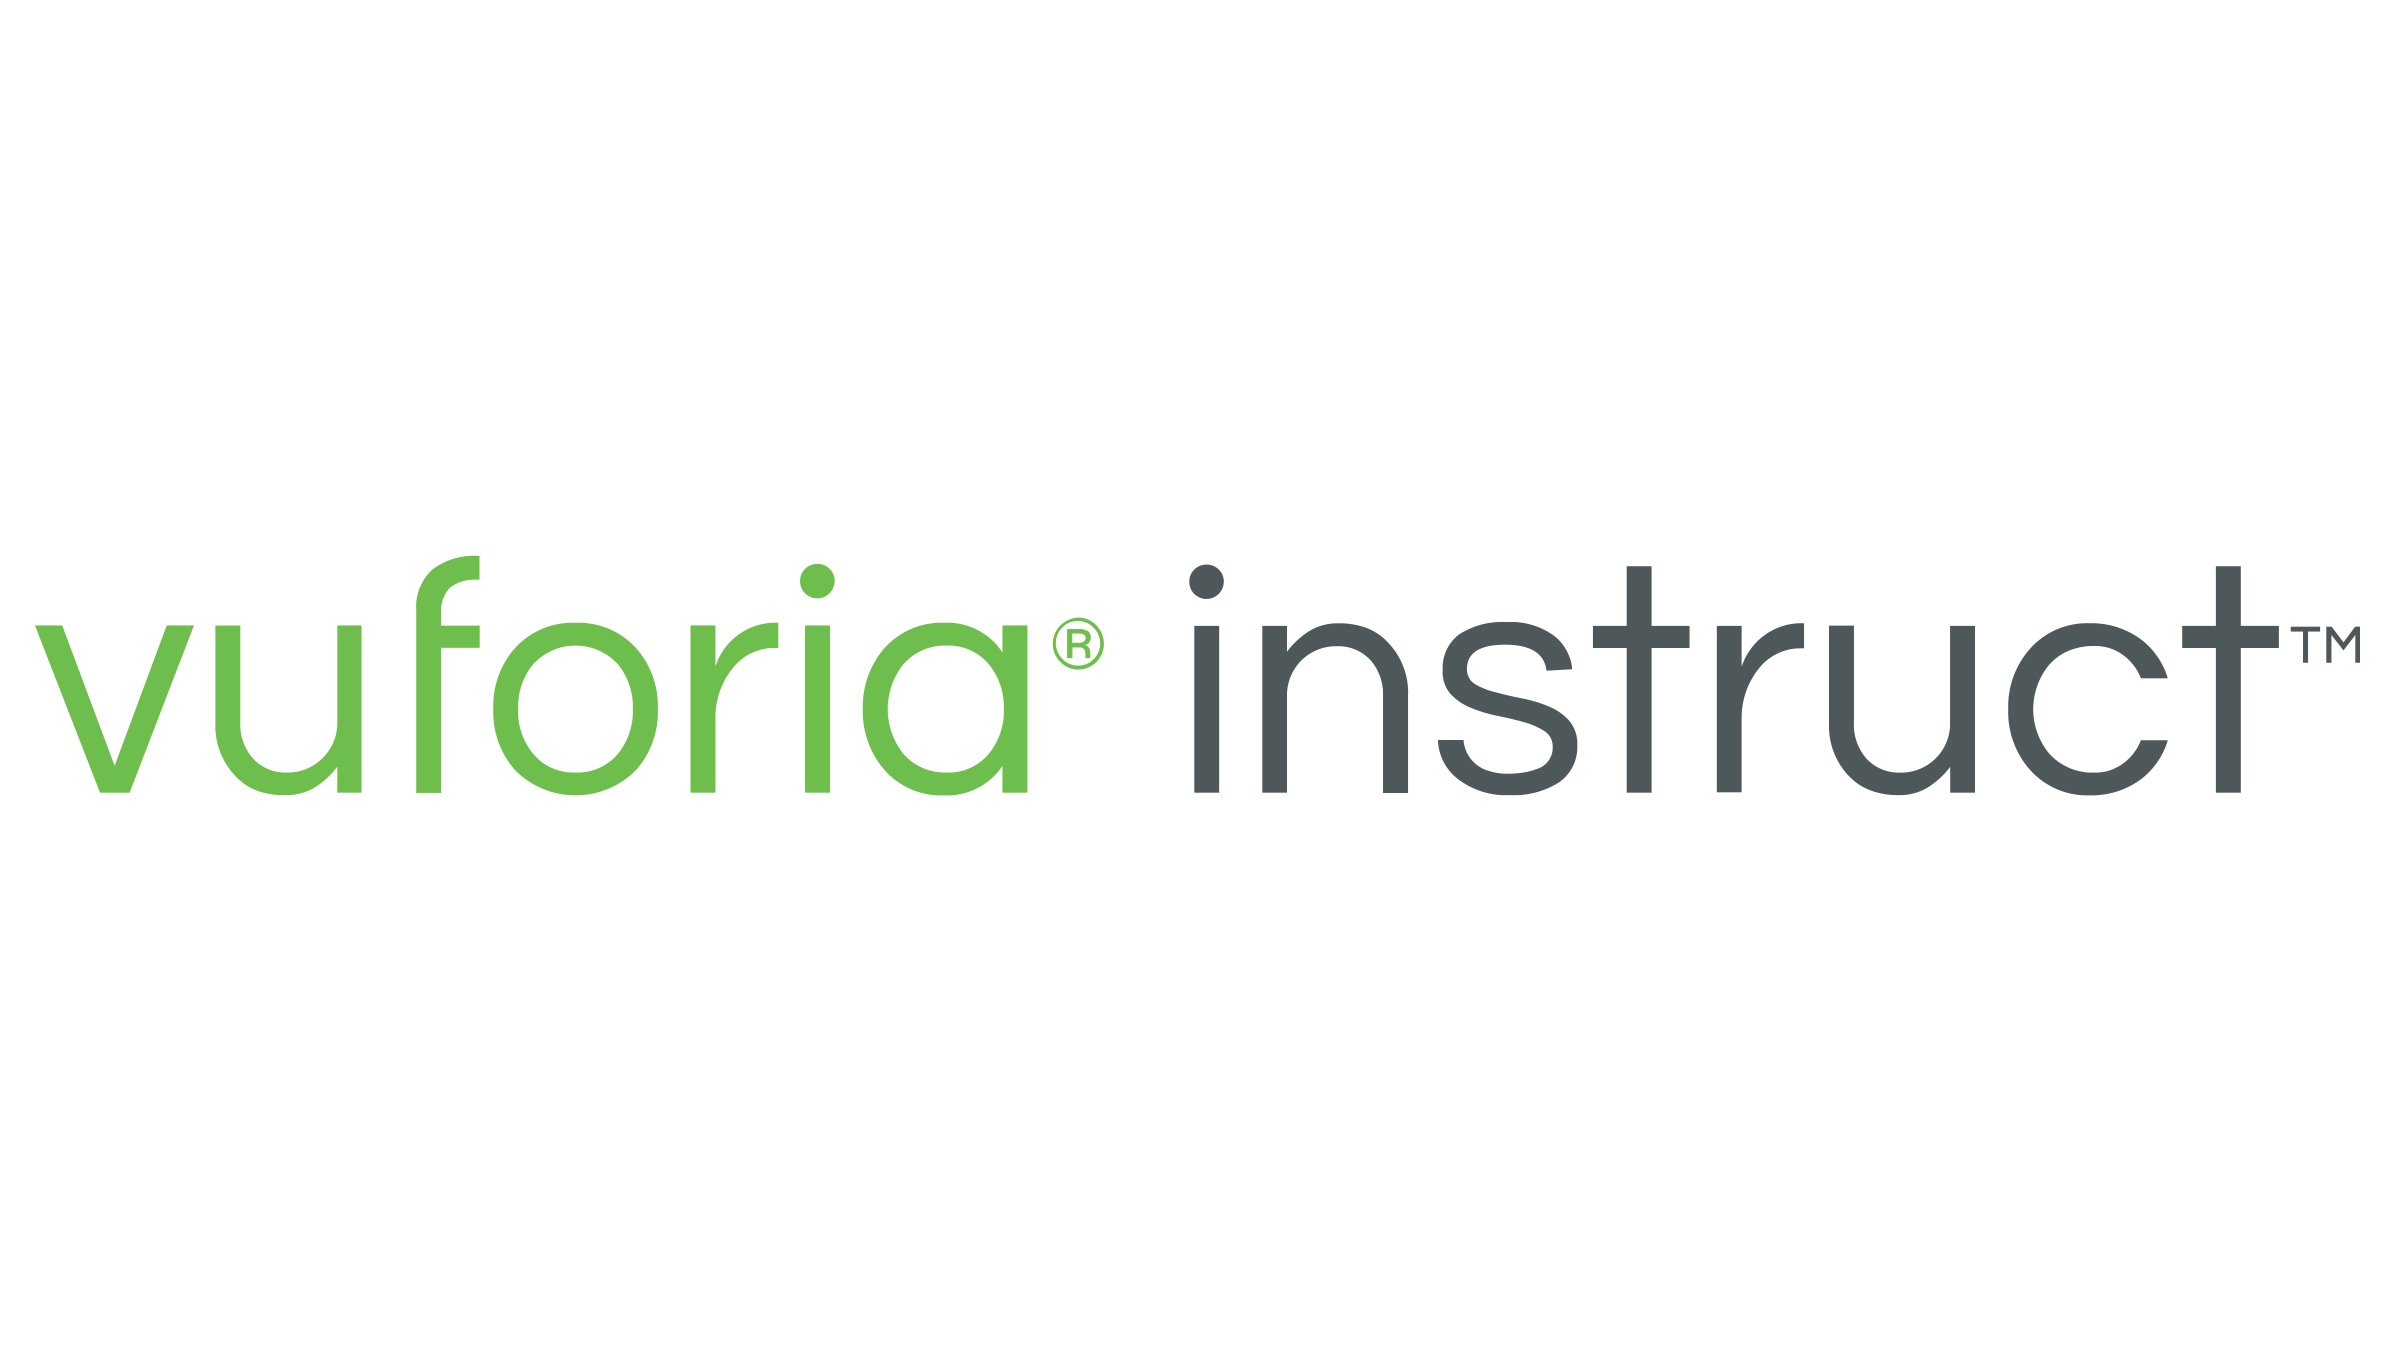 Green and grey PTC Vuforia Instruct logo